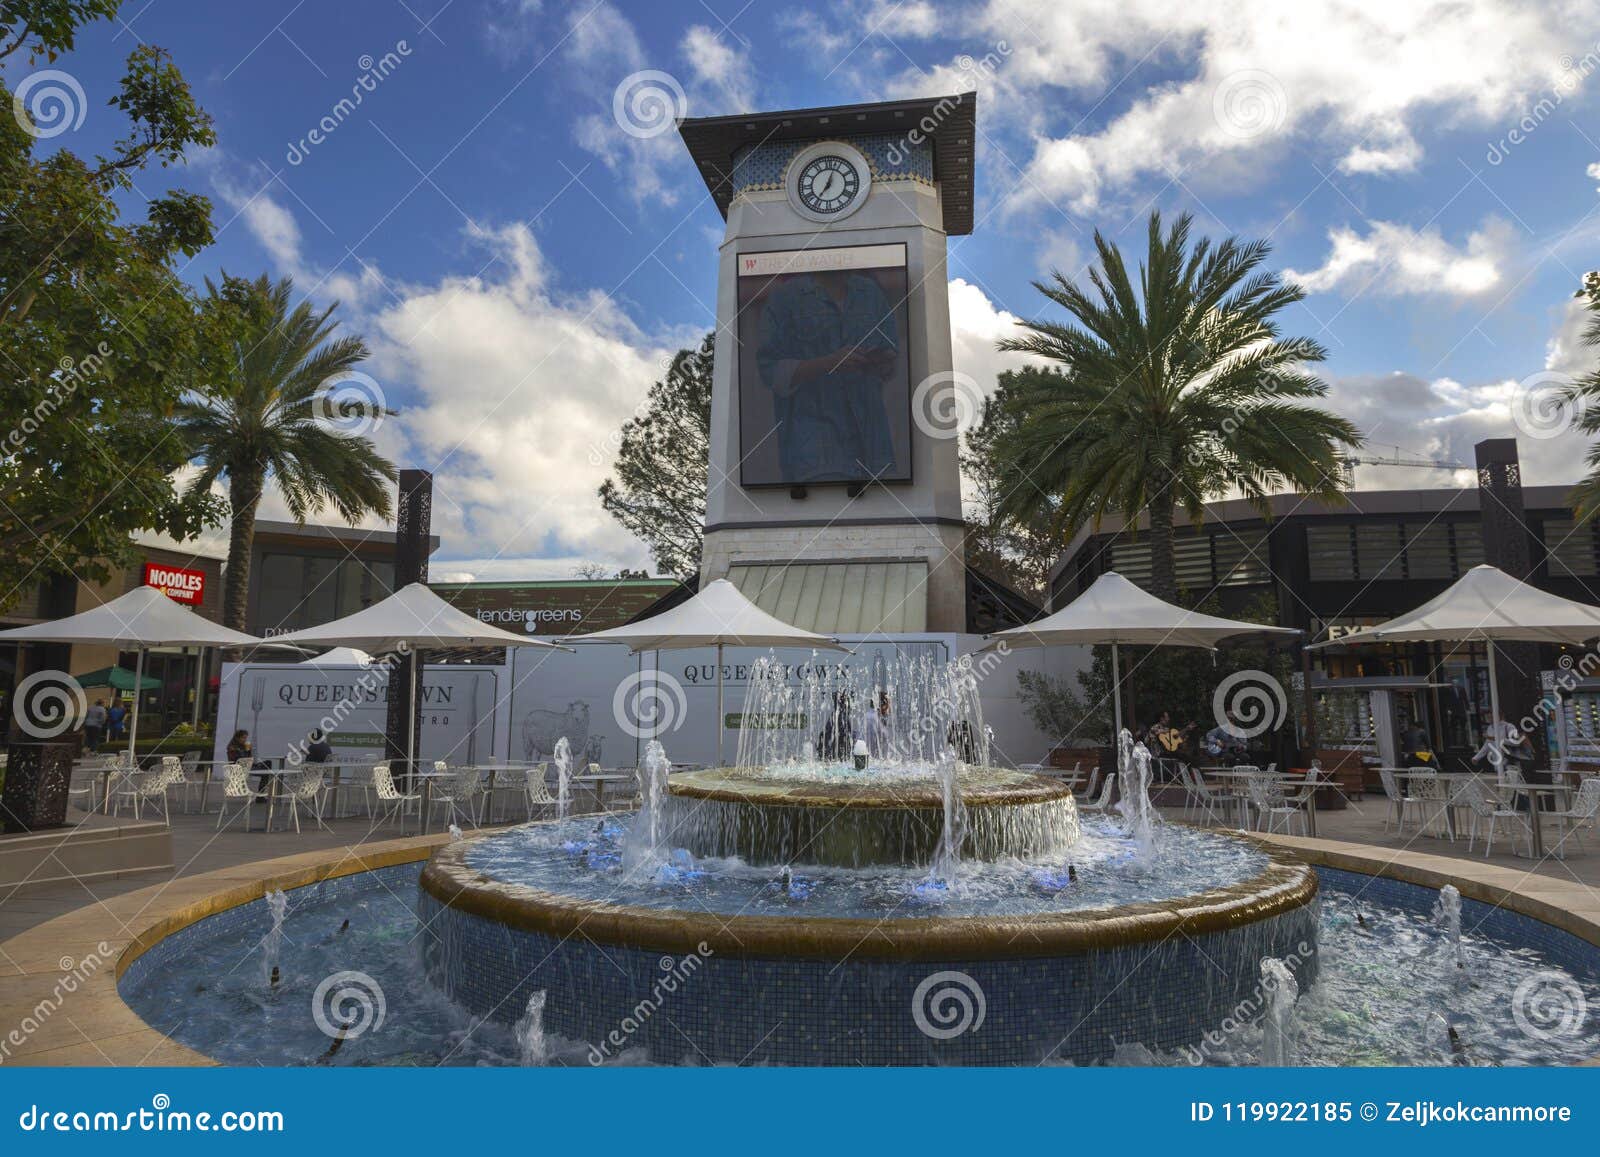 Westfield Shopping Center UTC La Jolla California USA Editorial Image -  Image of design, circular: 119922185